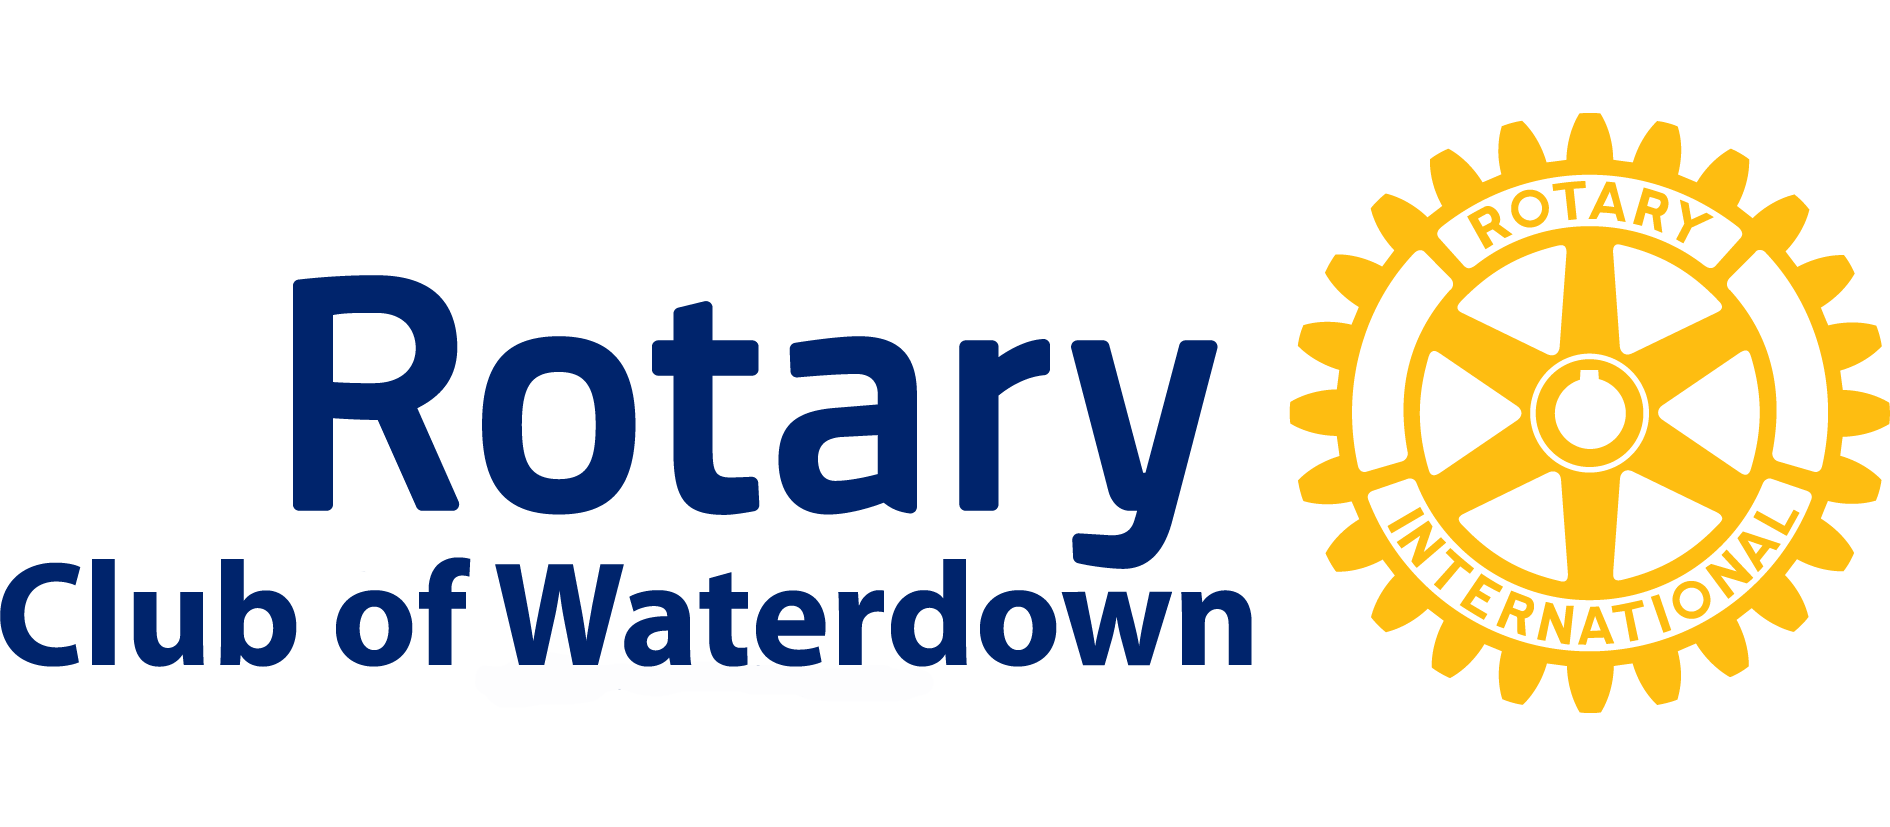 The Rotary Club of Waterdown